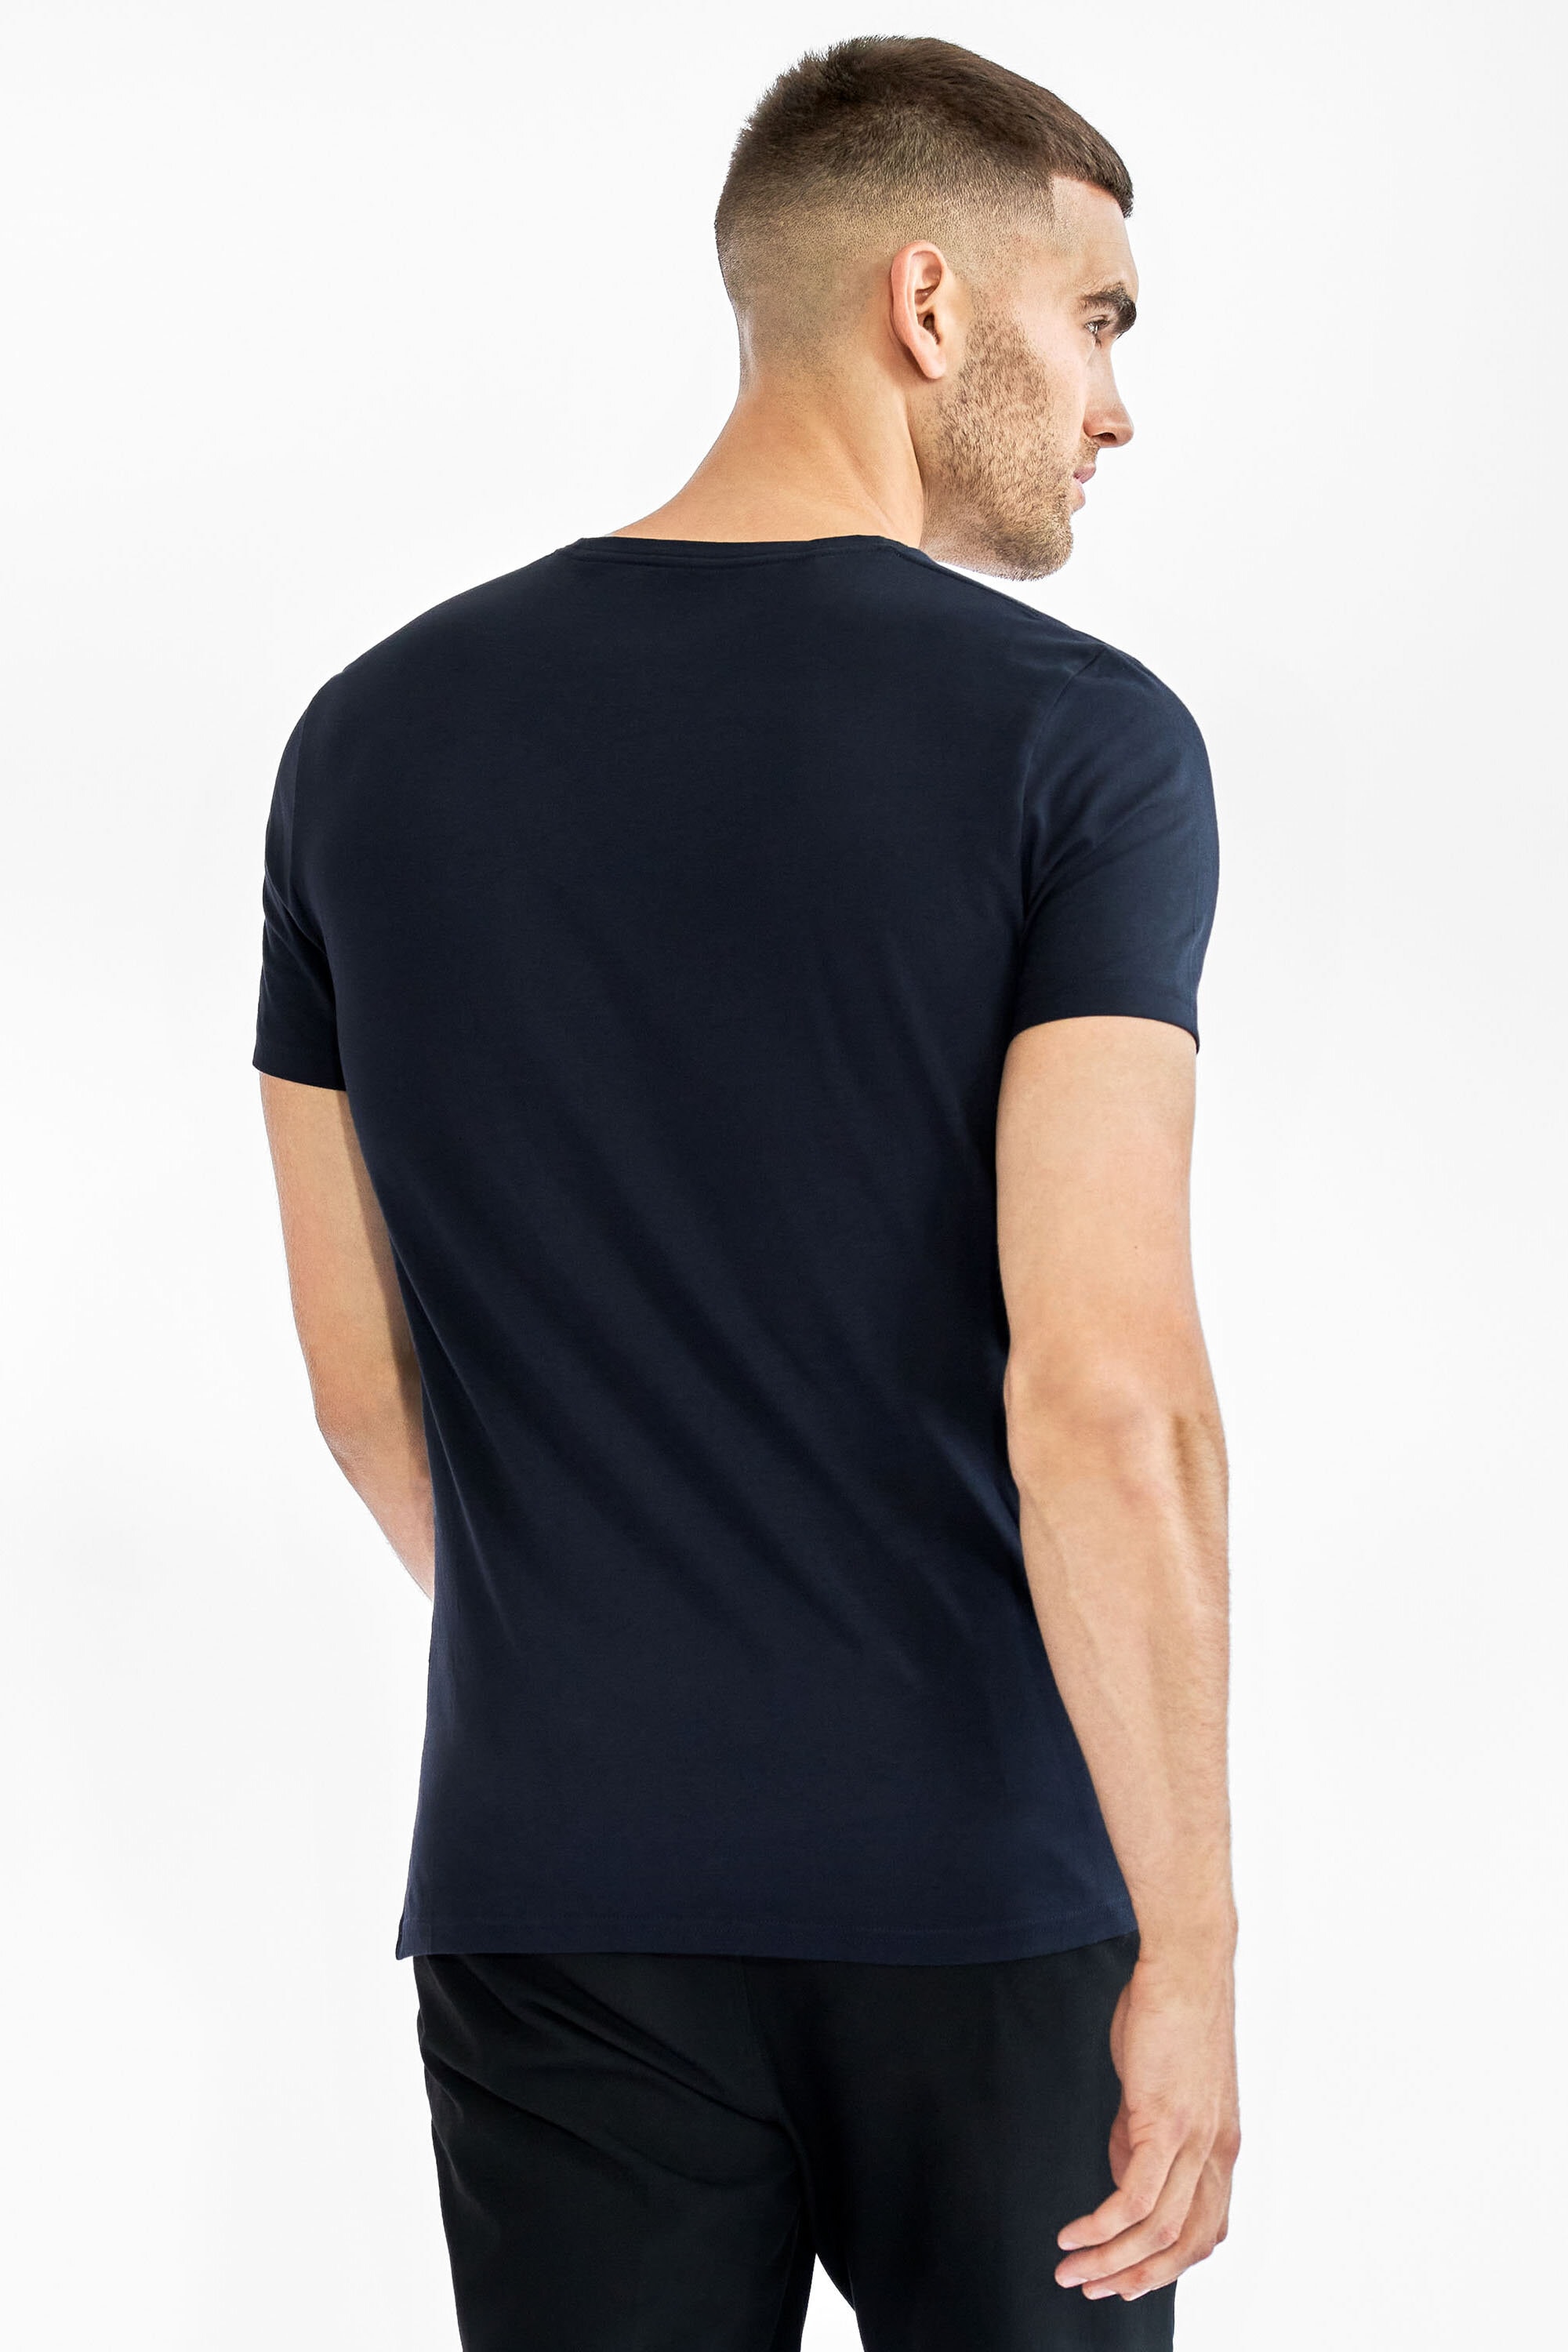 Details about   5Fin Men's Logo Cotton with Pocket Short Estate Blue T-Shirt MFT1001-ESBL 